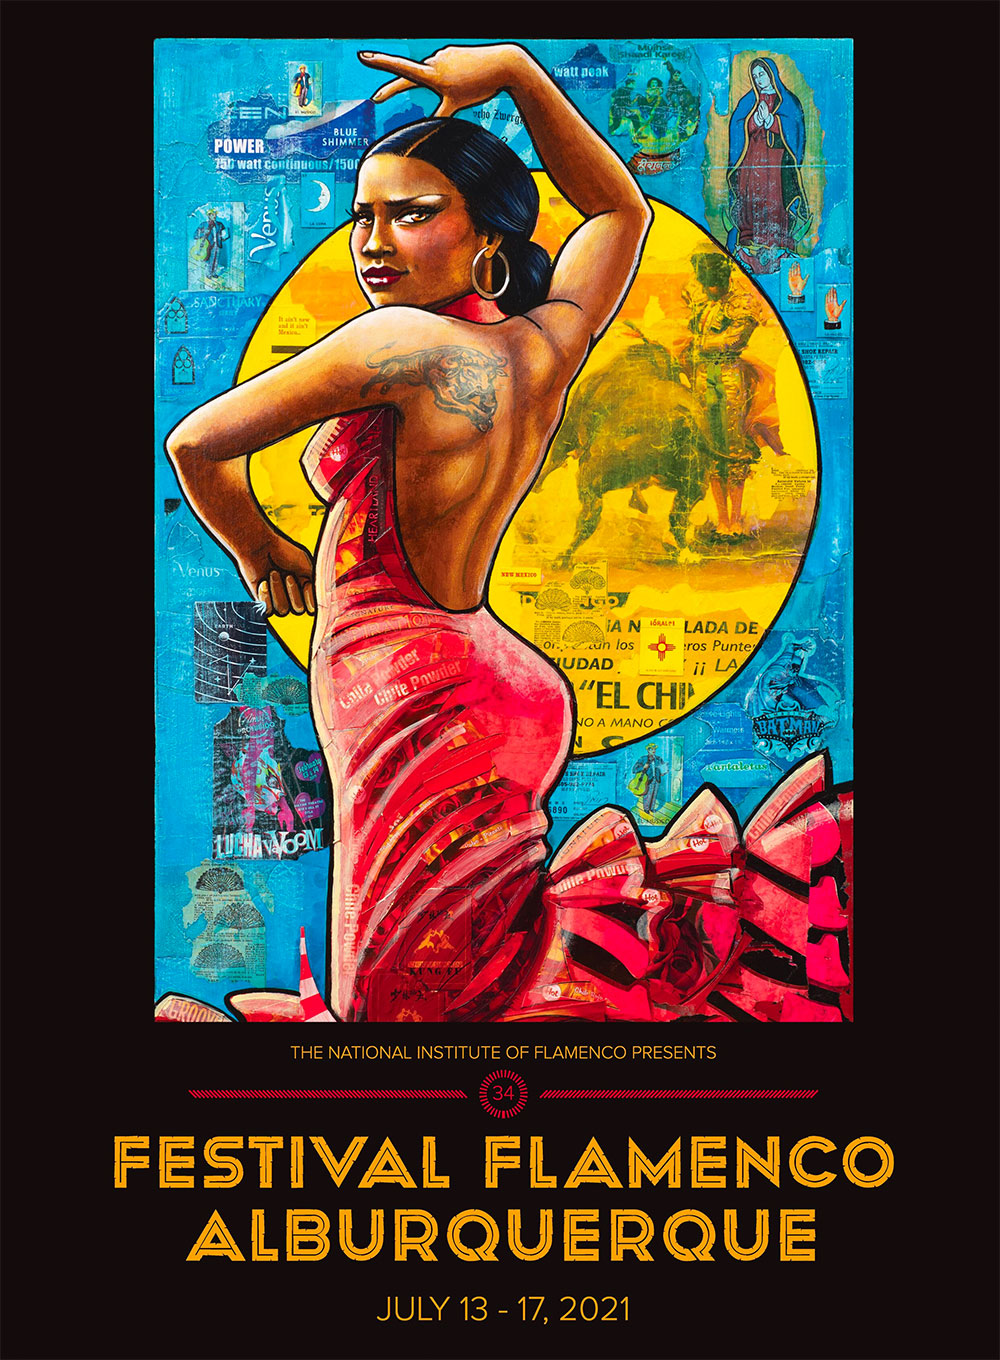 El Instituto Nacional de Flamenco presenta con orgullo Festival Flamenco Alburquerque 34